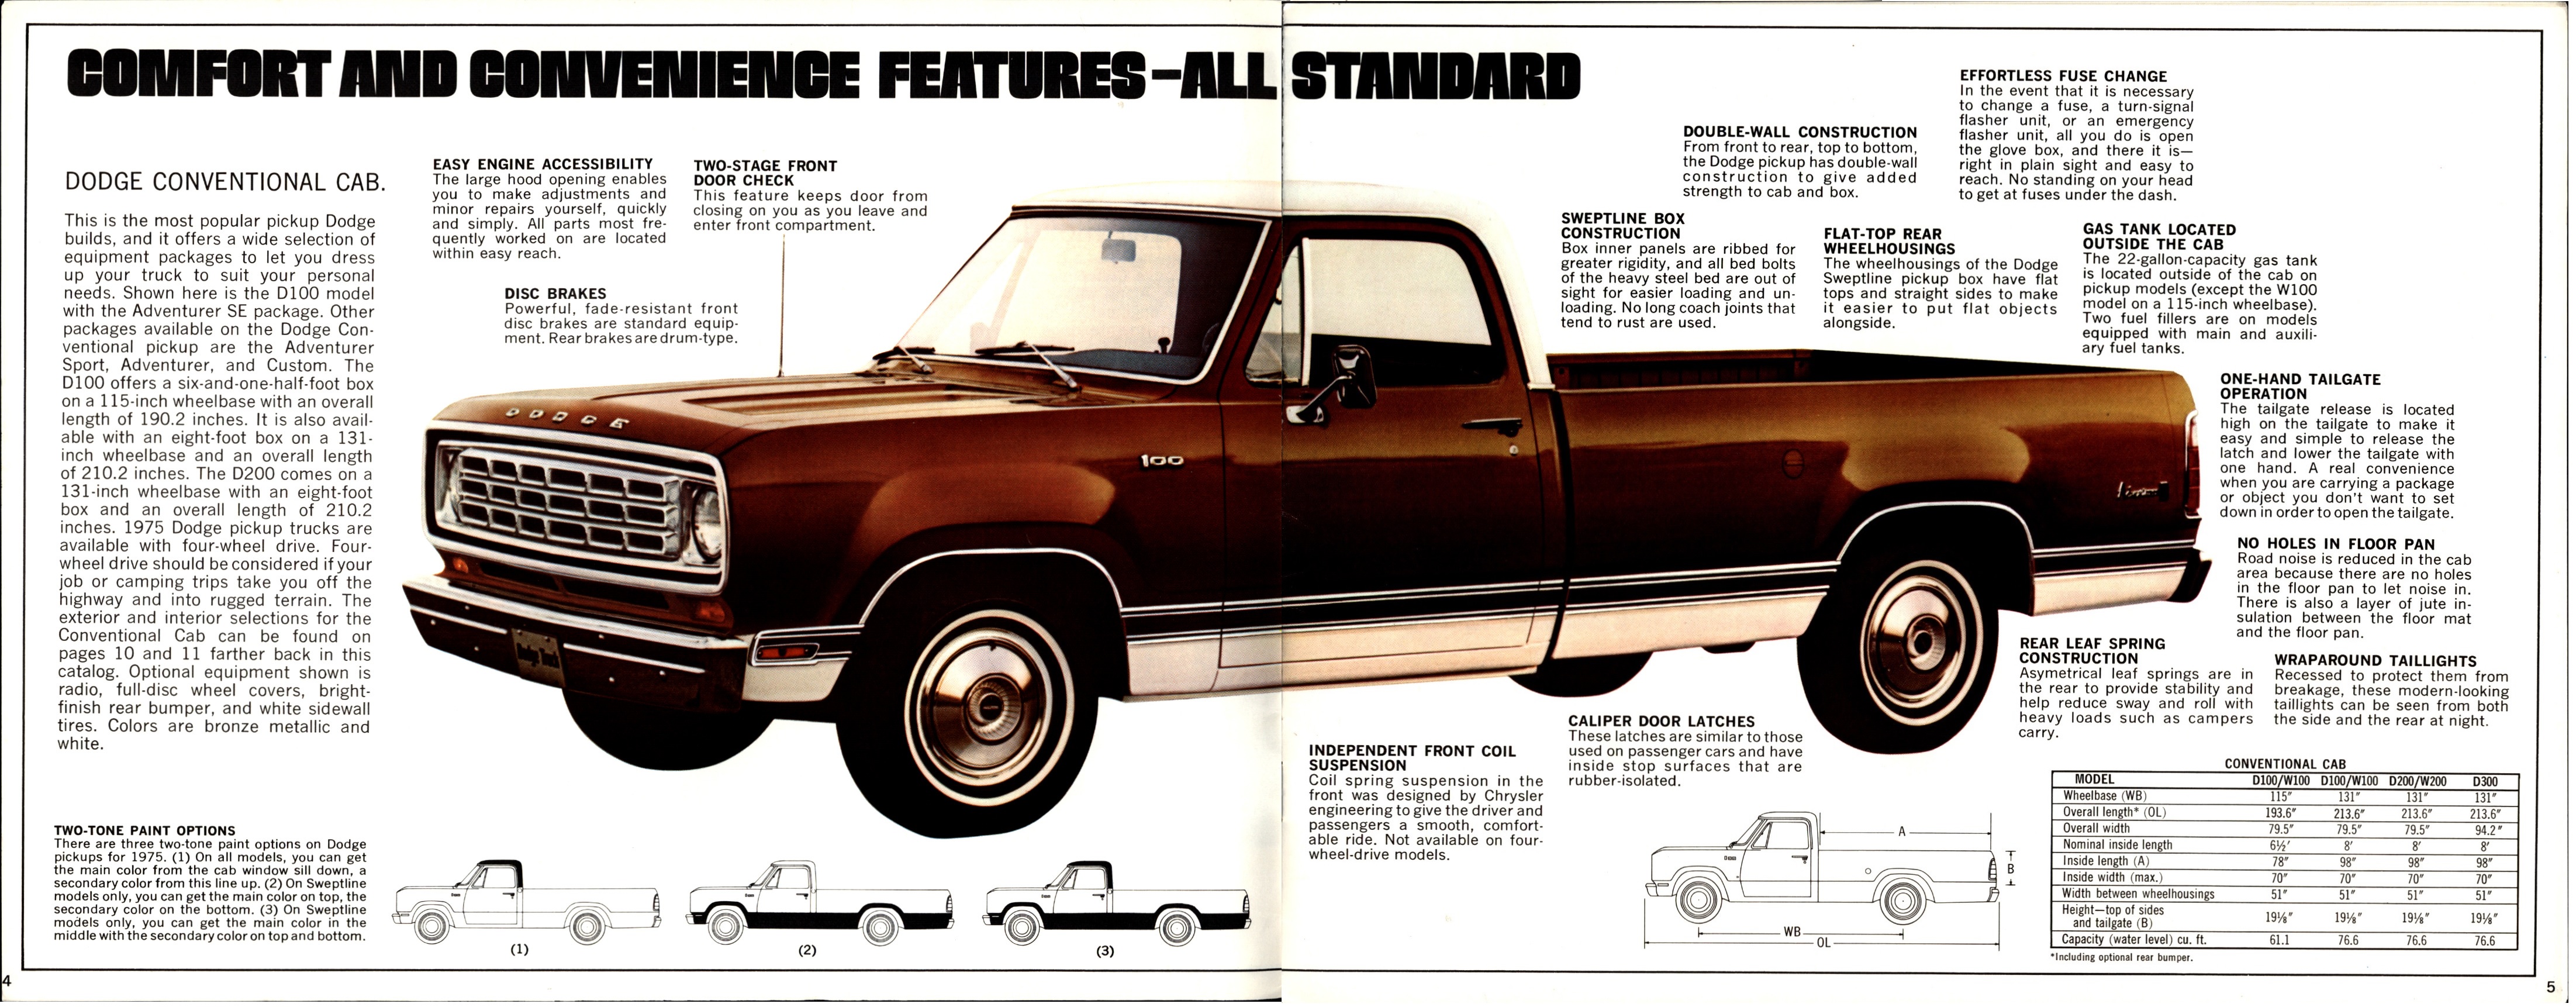 1975 Dodge Pickups Brochure 04-05